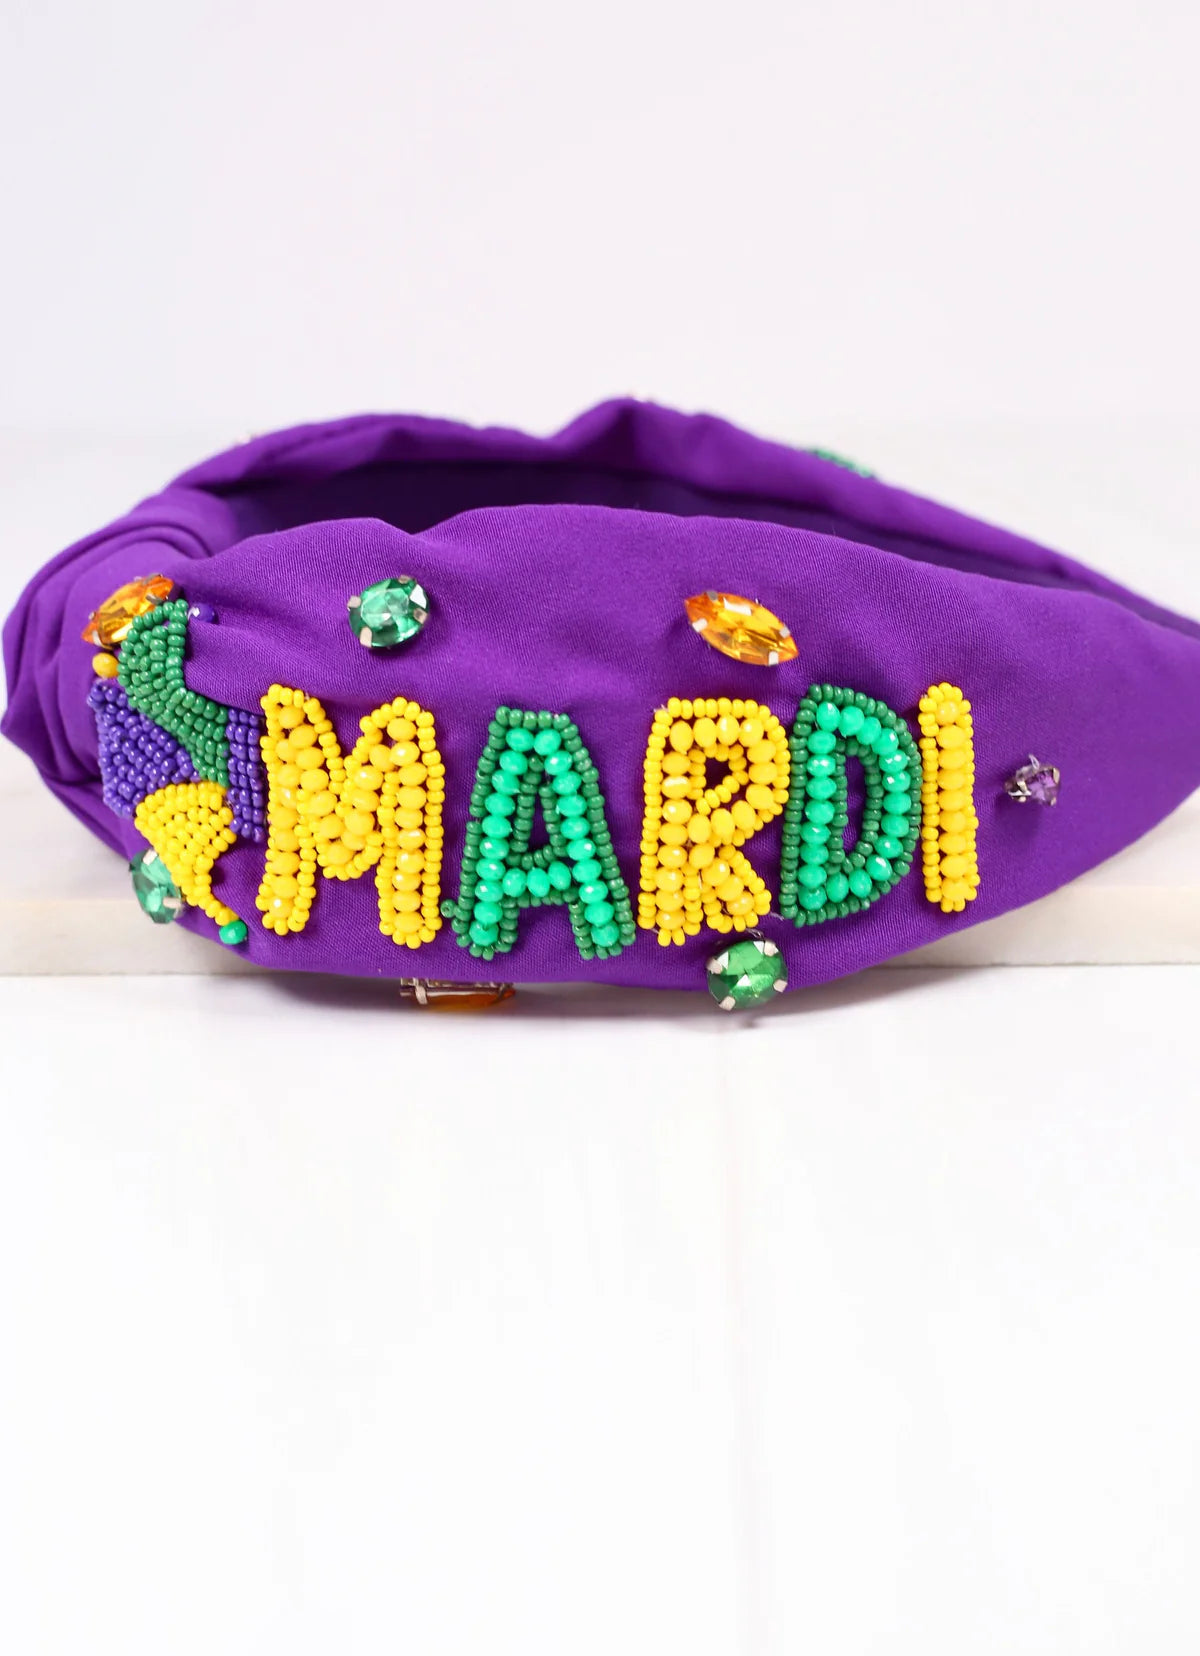 Mardi Gras Beaded Headband- Color Options Available